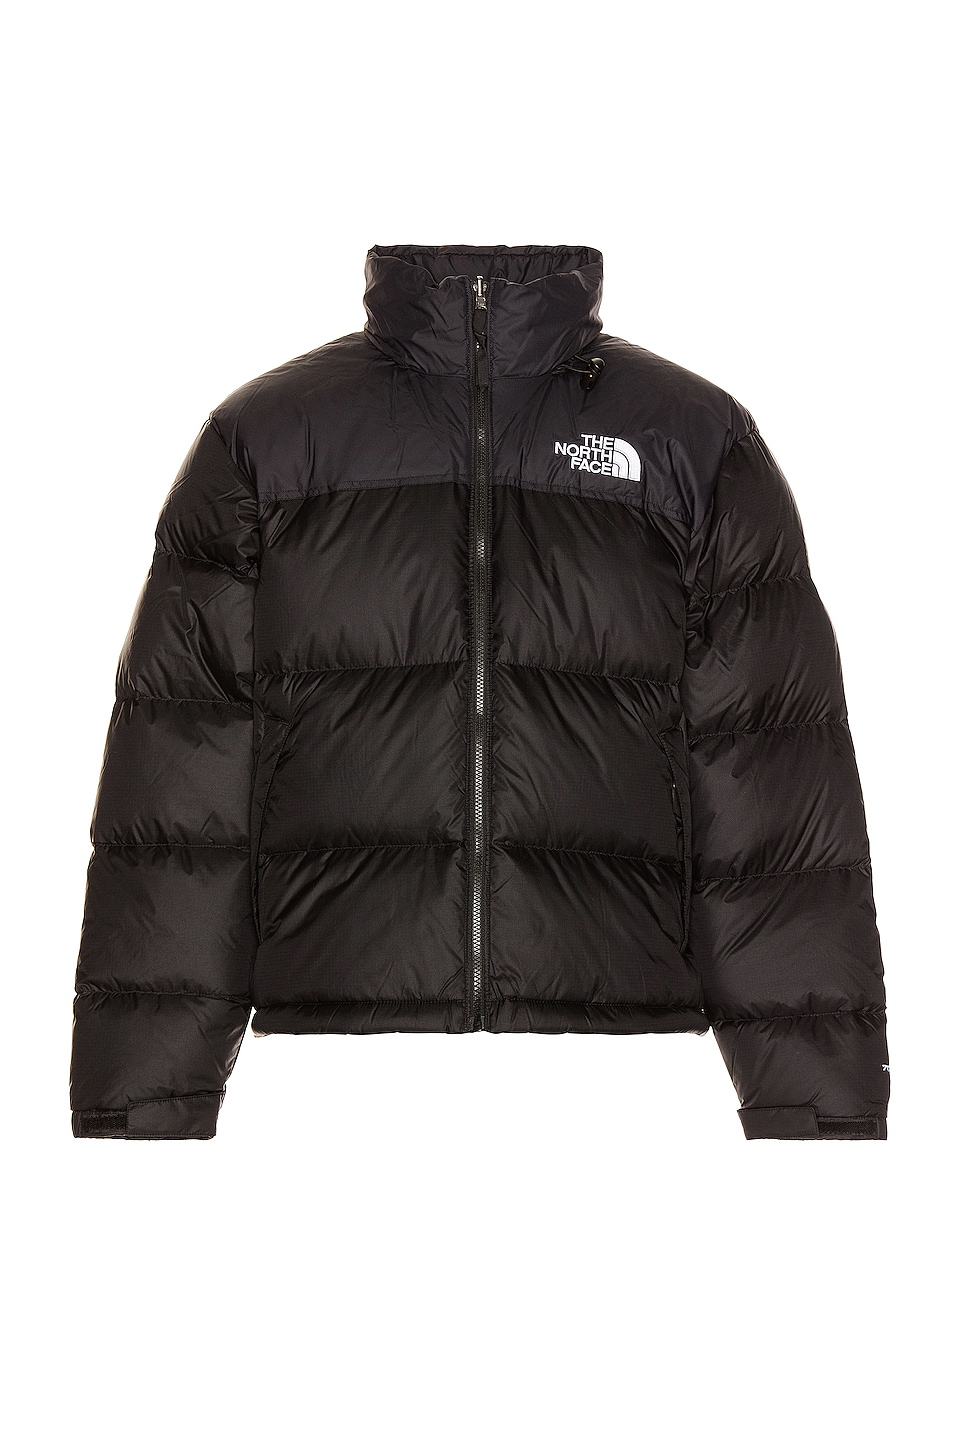 The North Face 1996 Retro Nuptse Jacket in Recycled TNF Black | REVOLVE